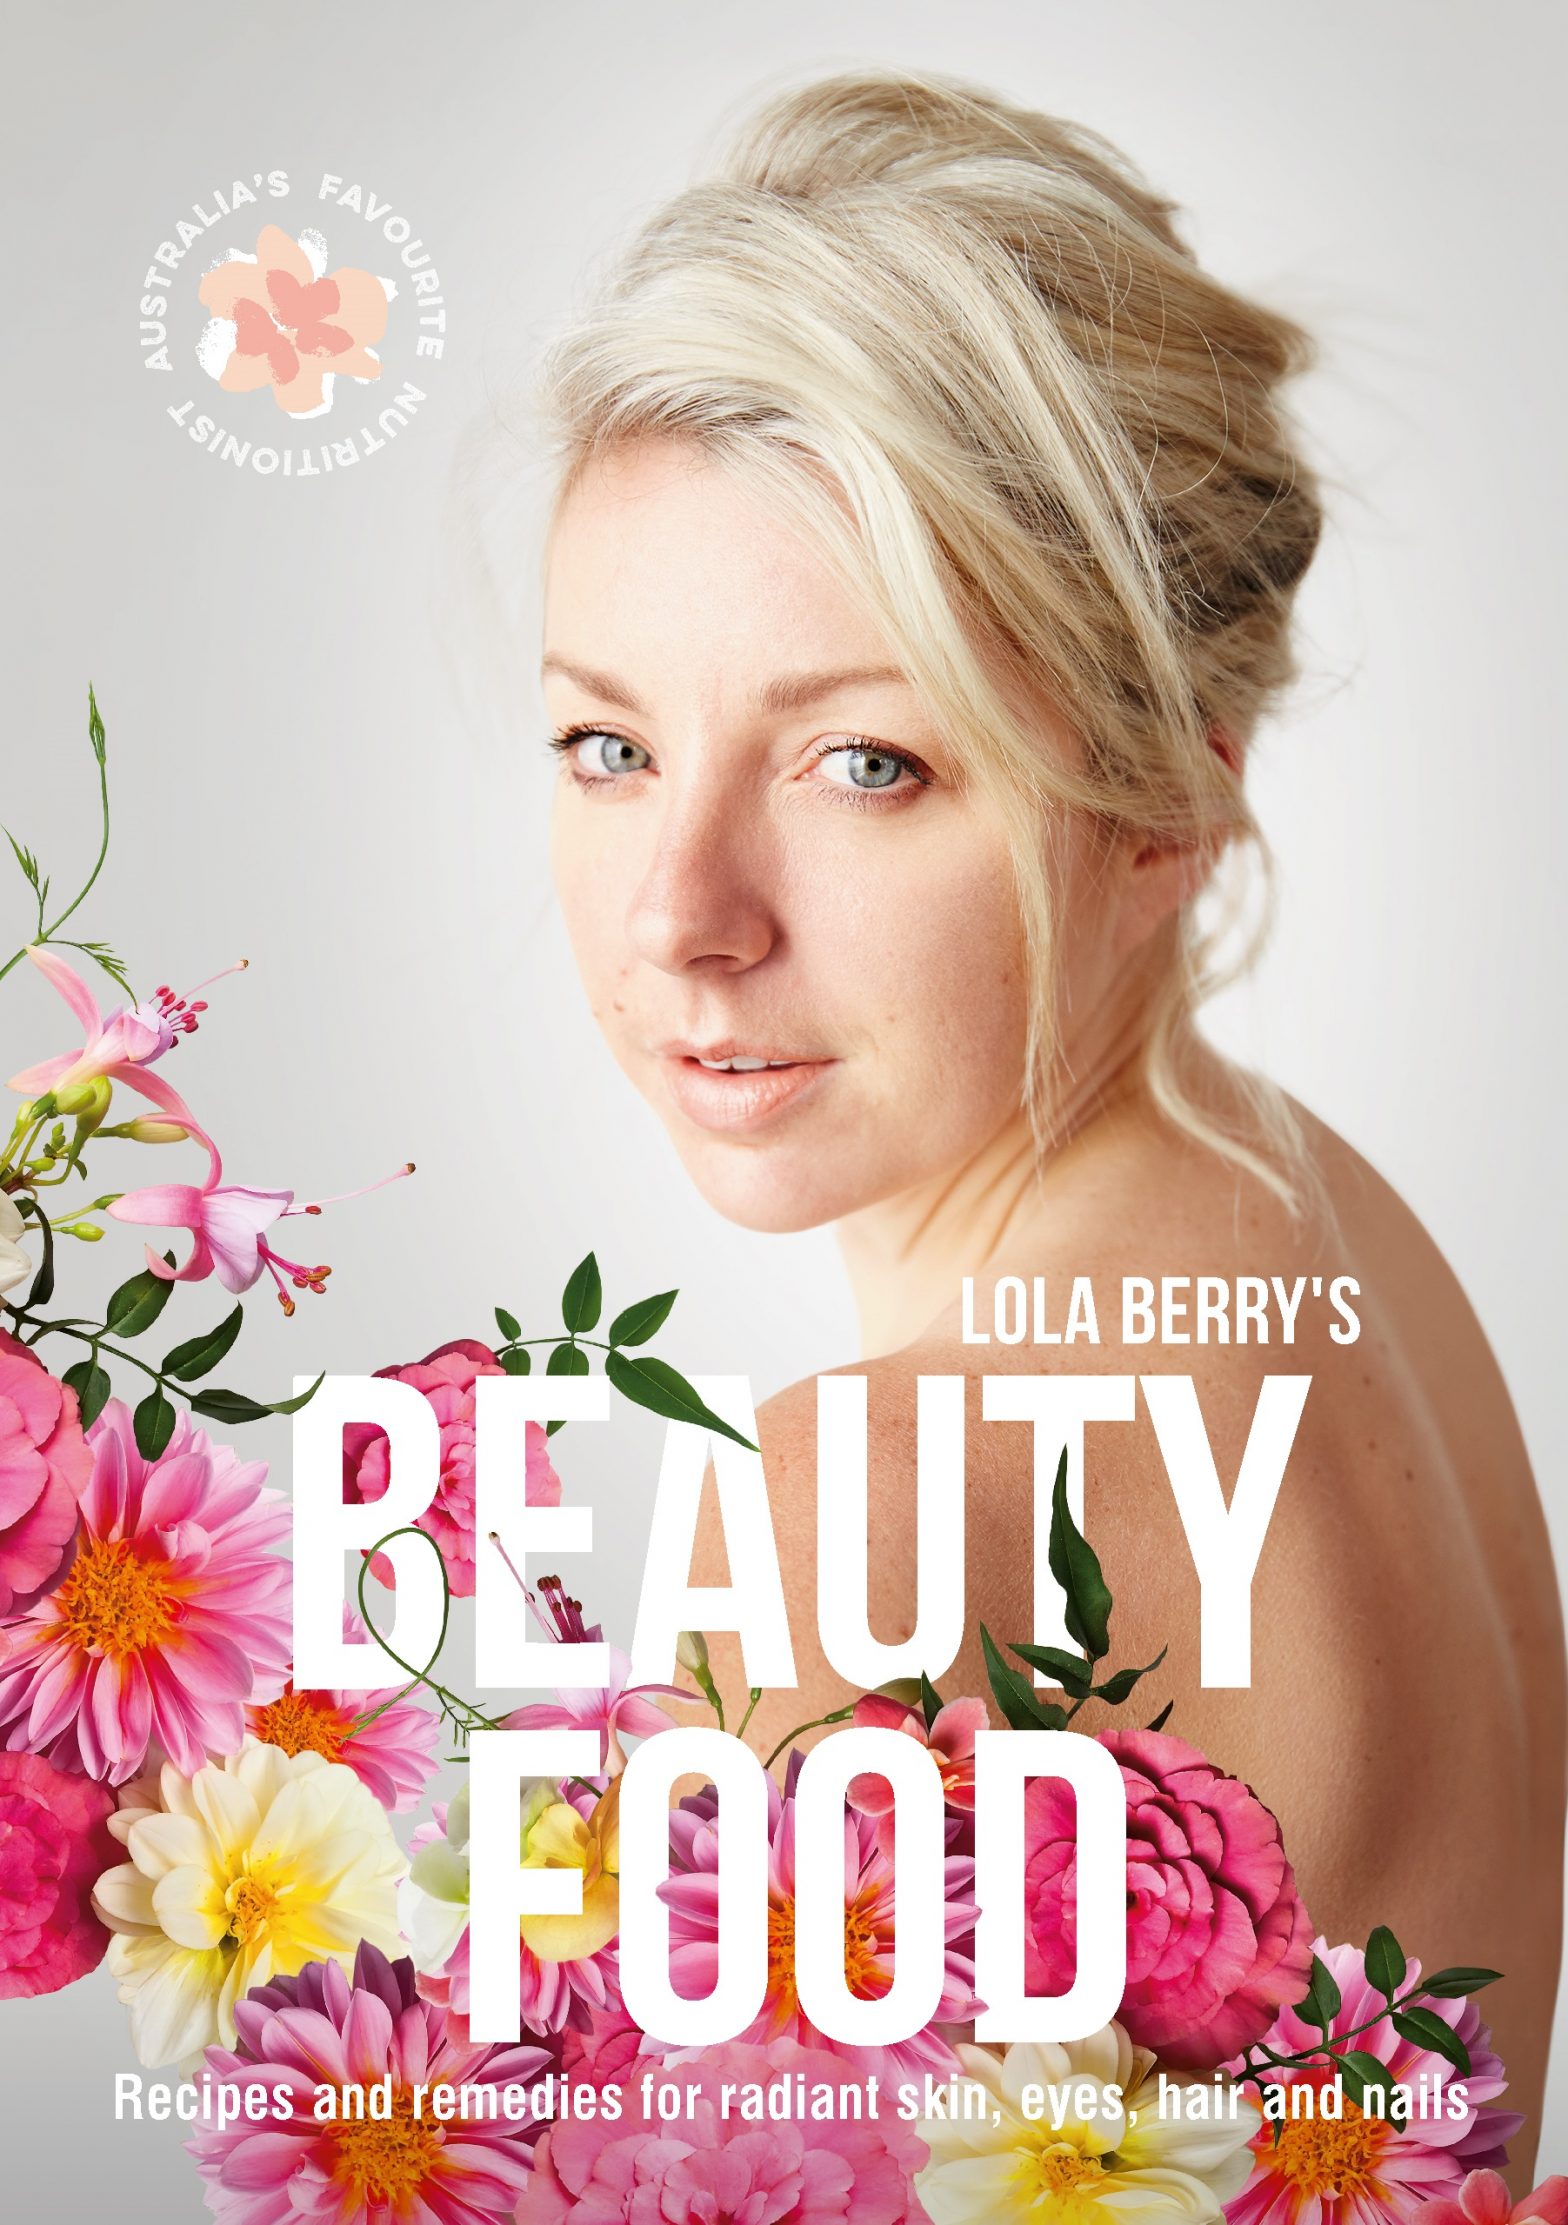 ‘Lola Berry’s Beauty Food’